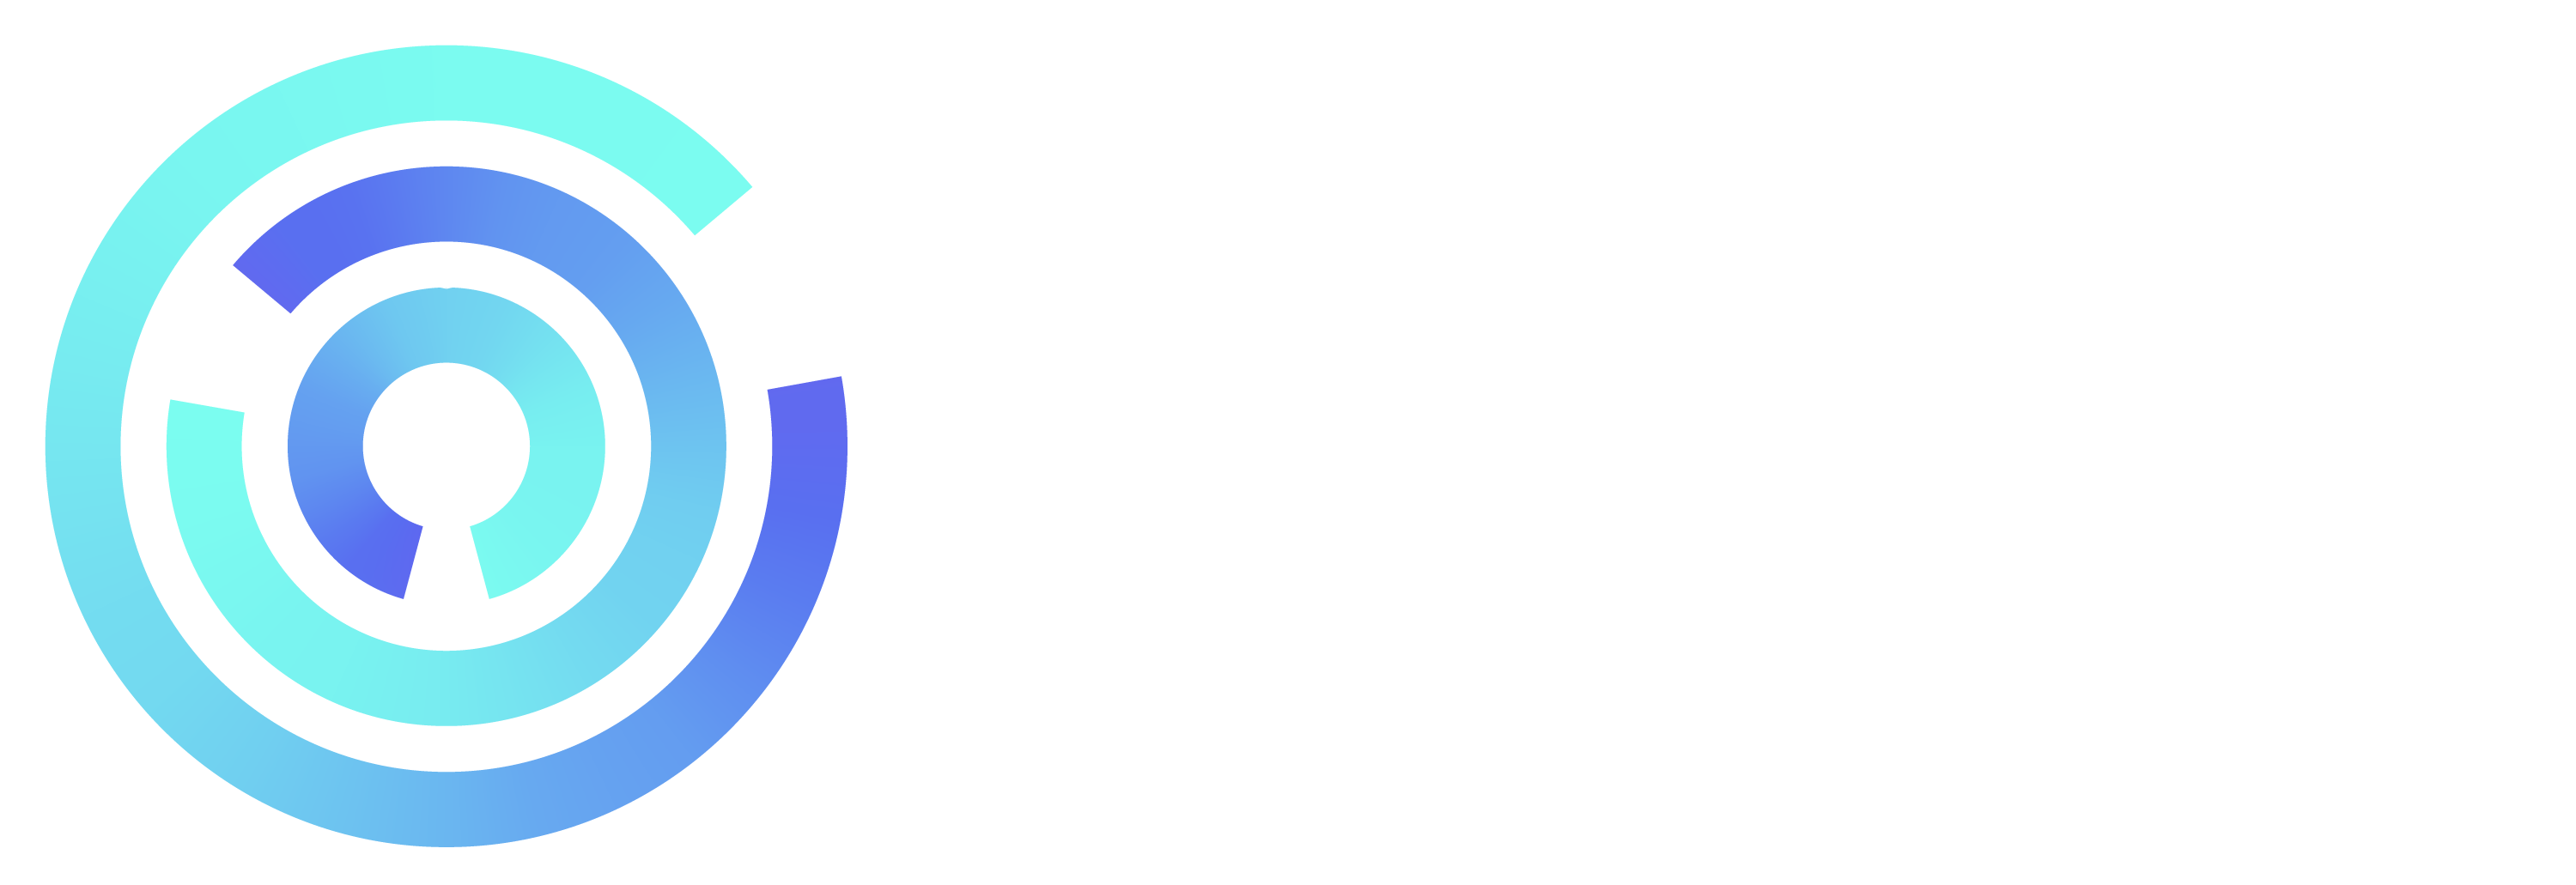 Finance Unlocked logo